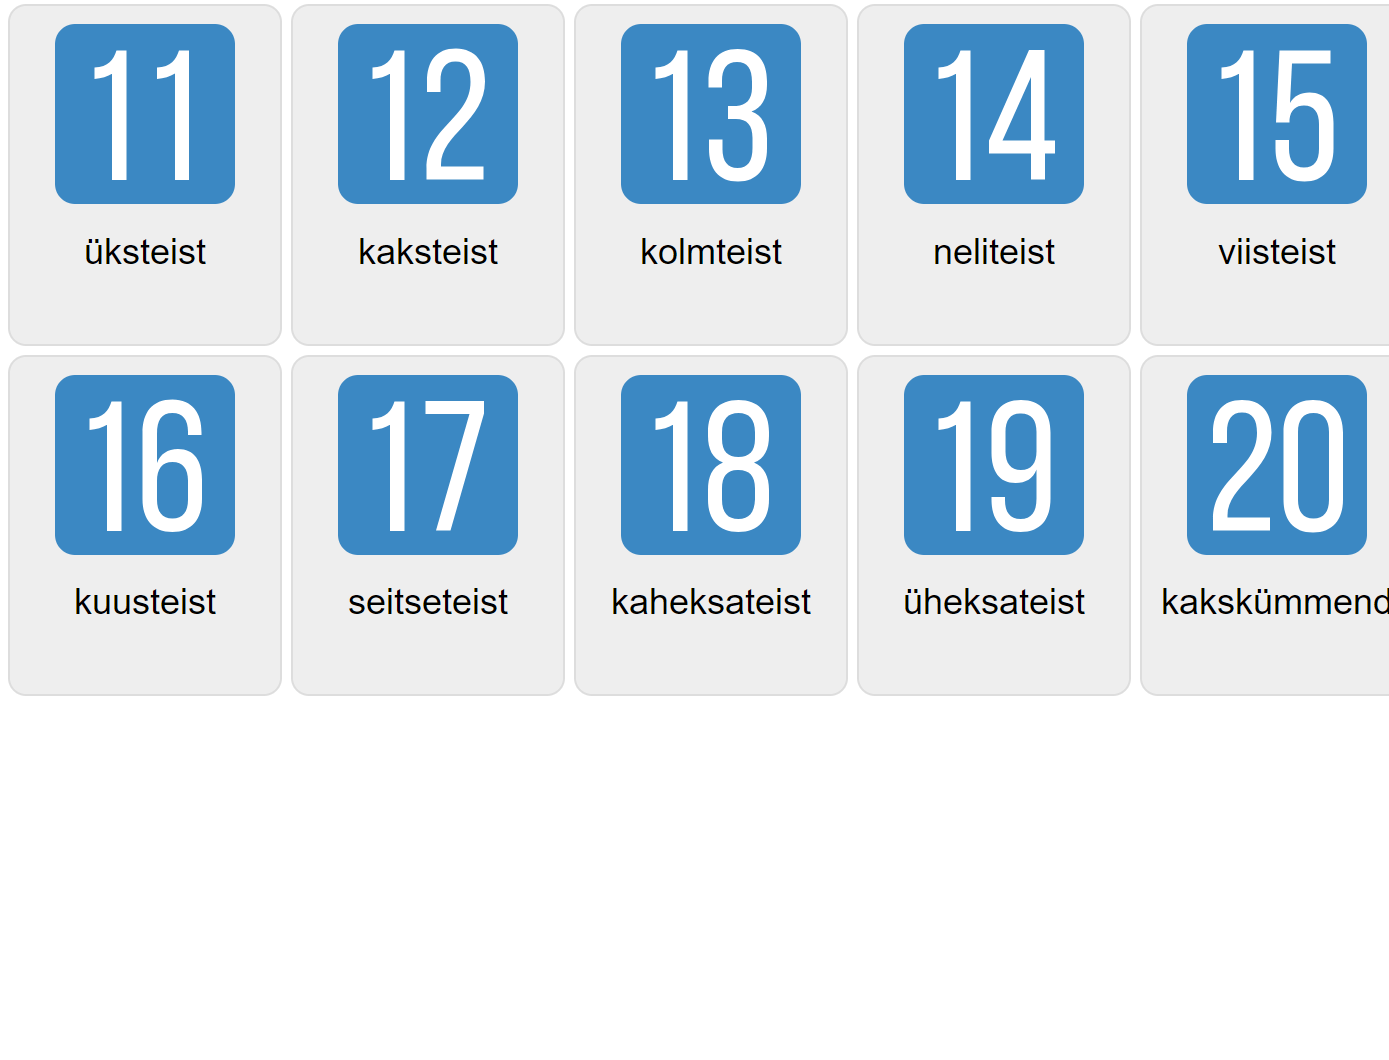 Числа 11-20 естонською мовою